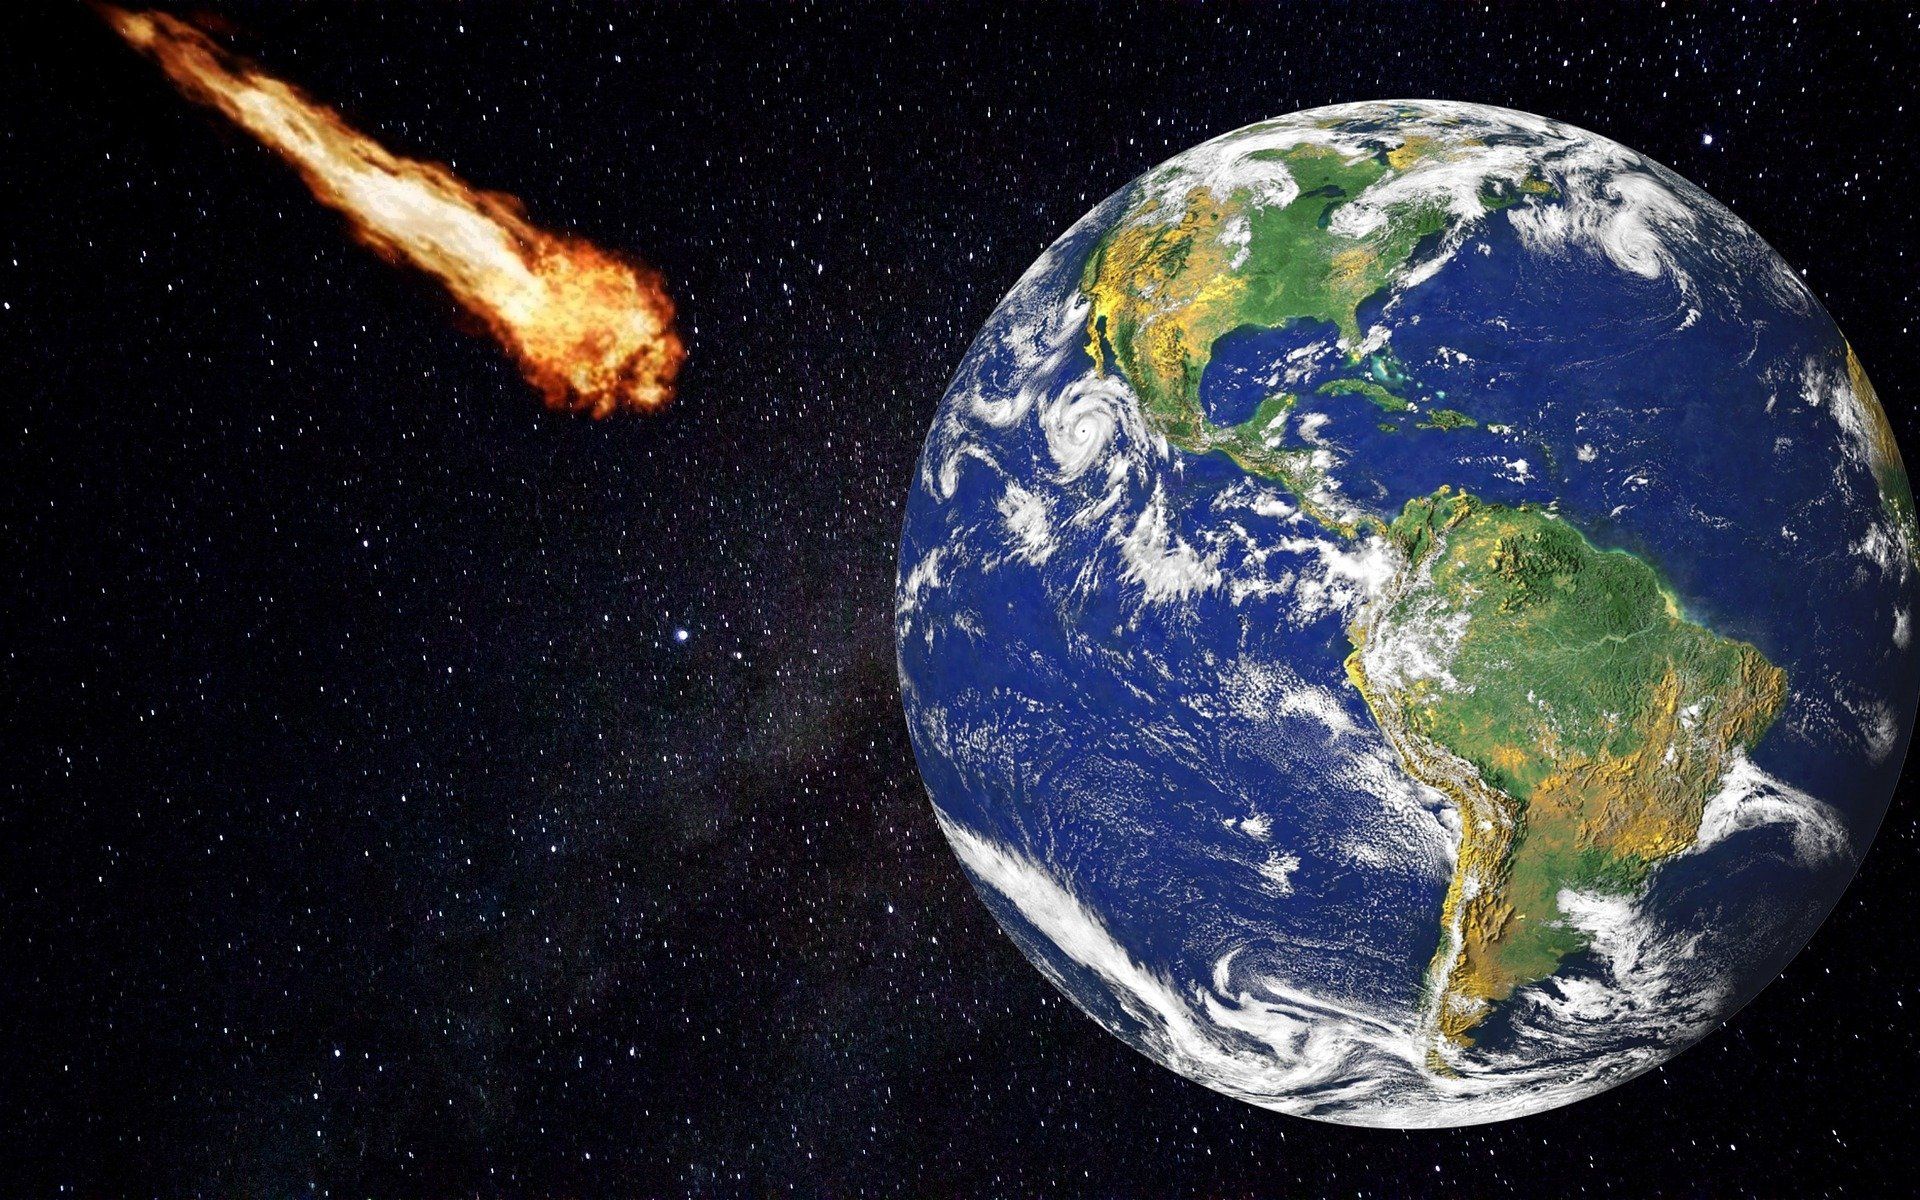 5 largest meteor strikes on Earth